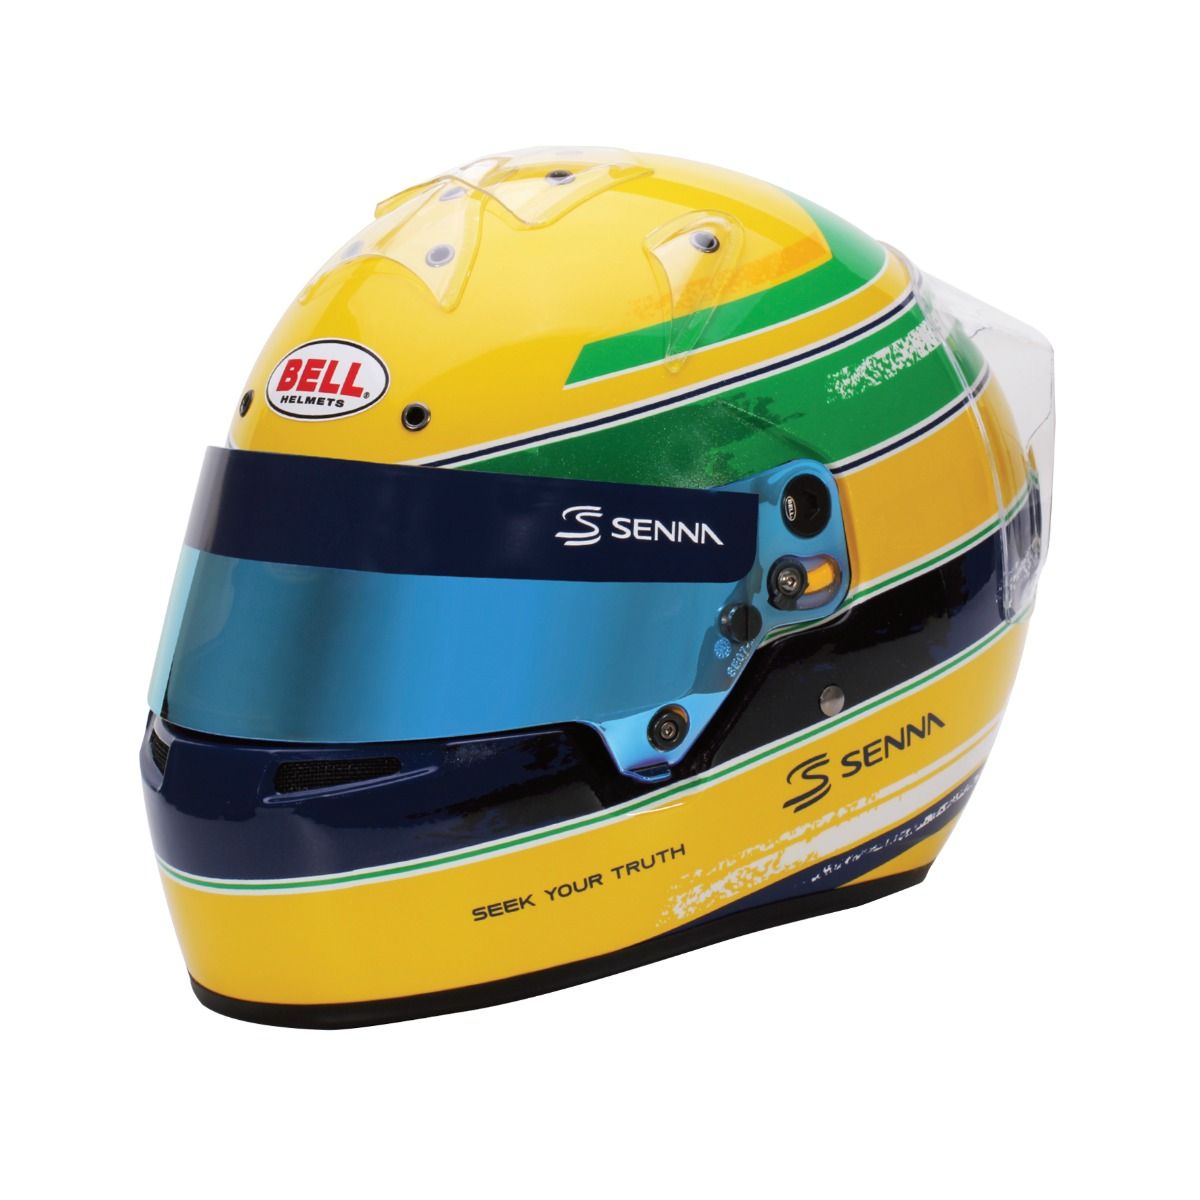 Bell Racing | KC7 CMR "Ayrton Senna" Karting Helmet-Karting Helmet-Bell Racing-gpx-store